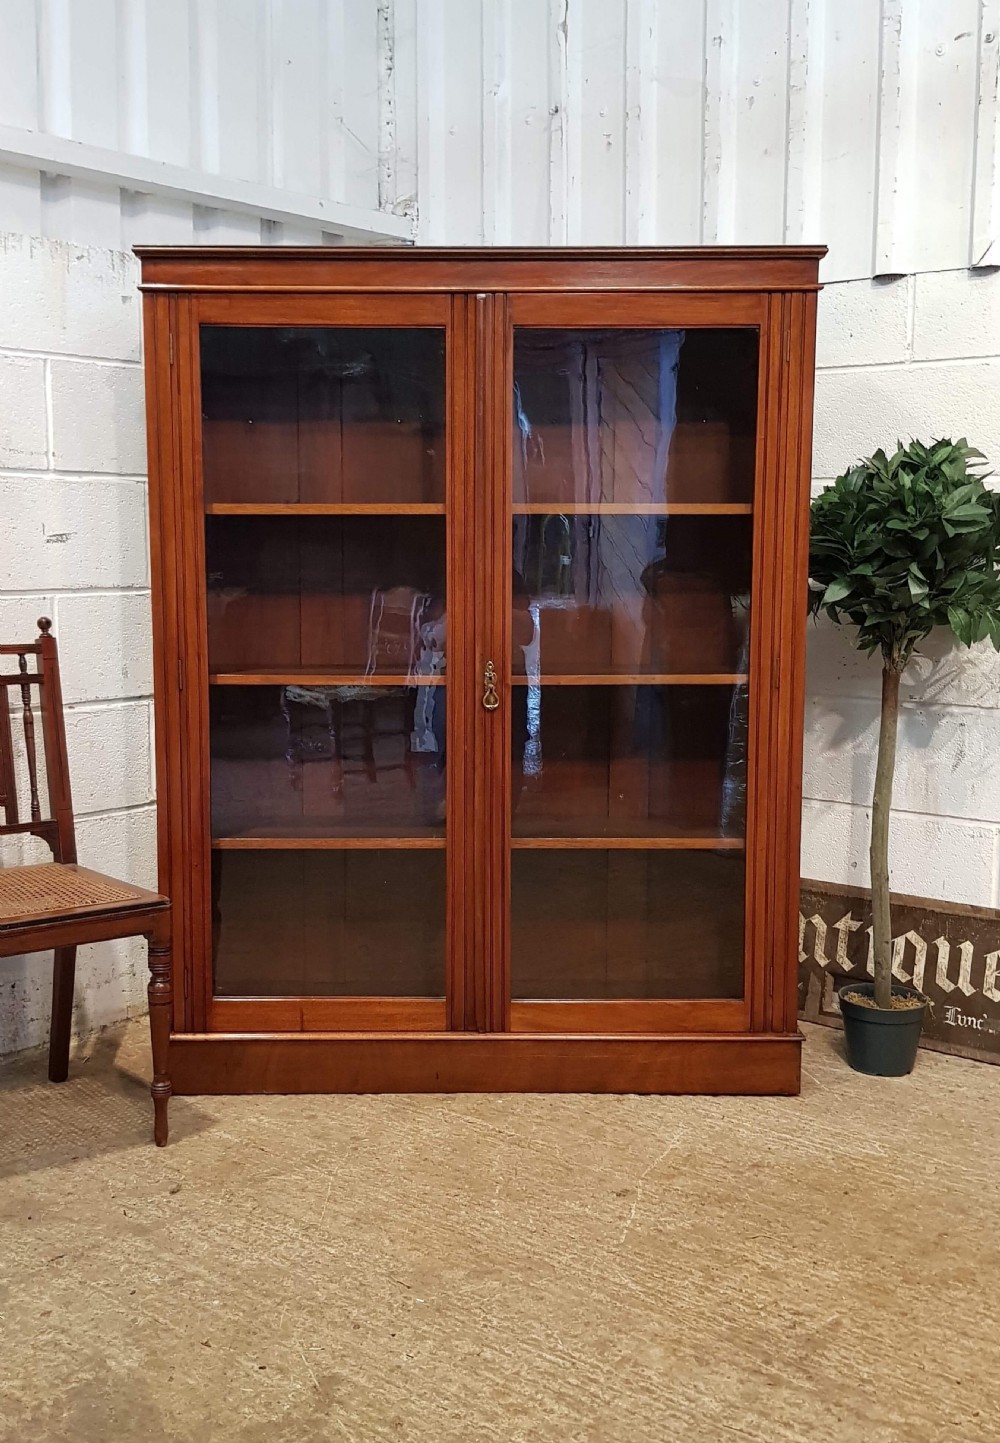 antique victorian mahogany glazed bookcase c1880